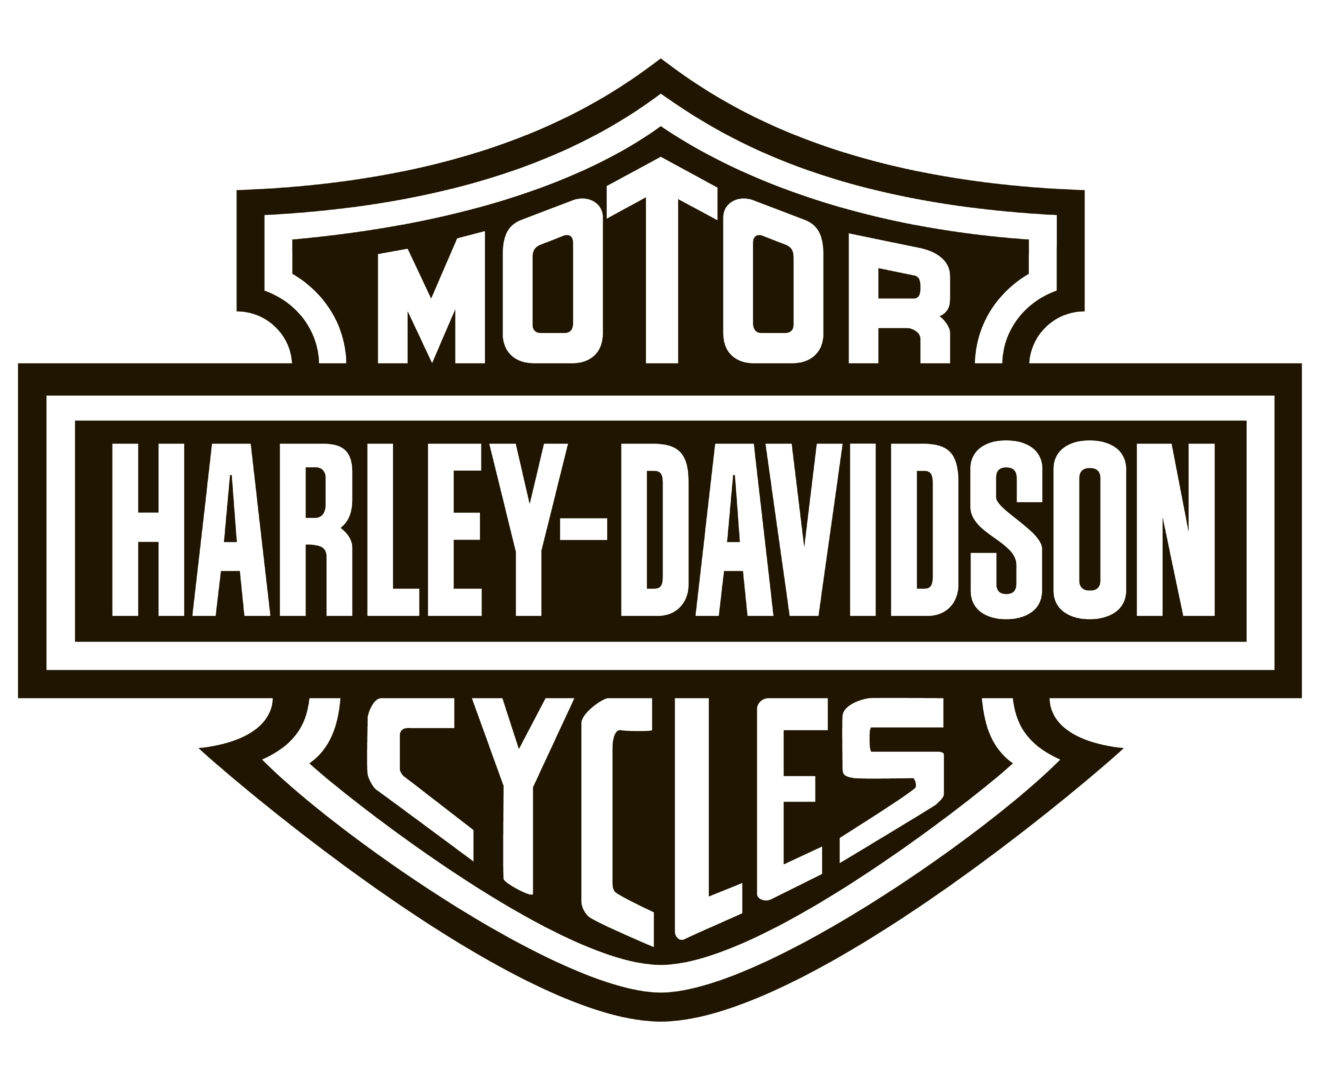 HarleyDavidson motorcycle logo history and Meaning, bike emblem